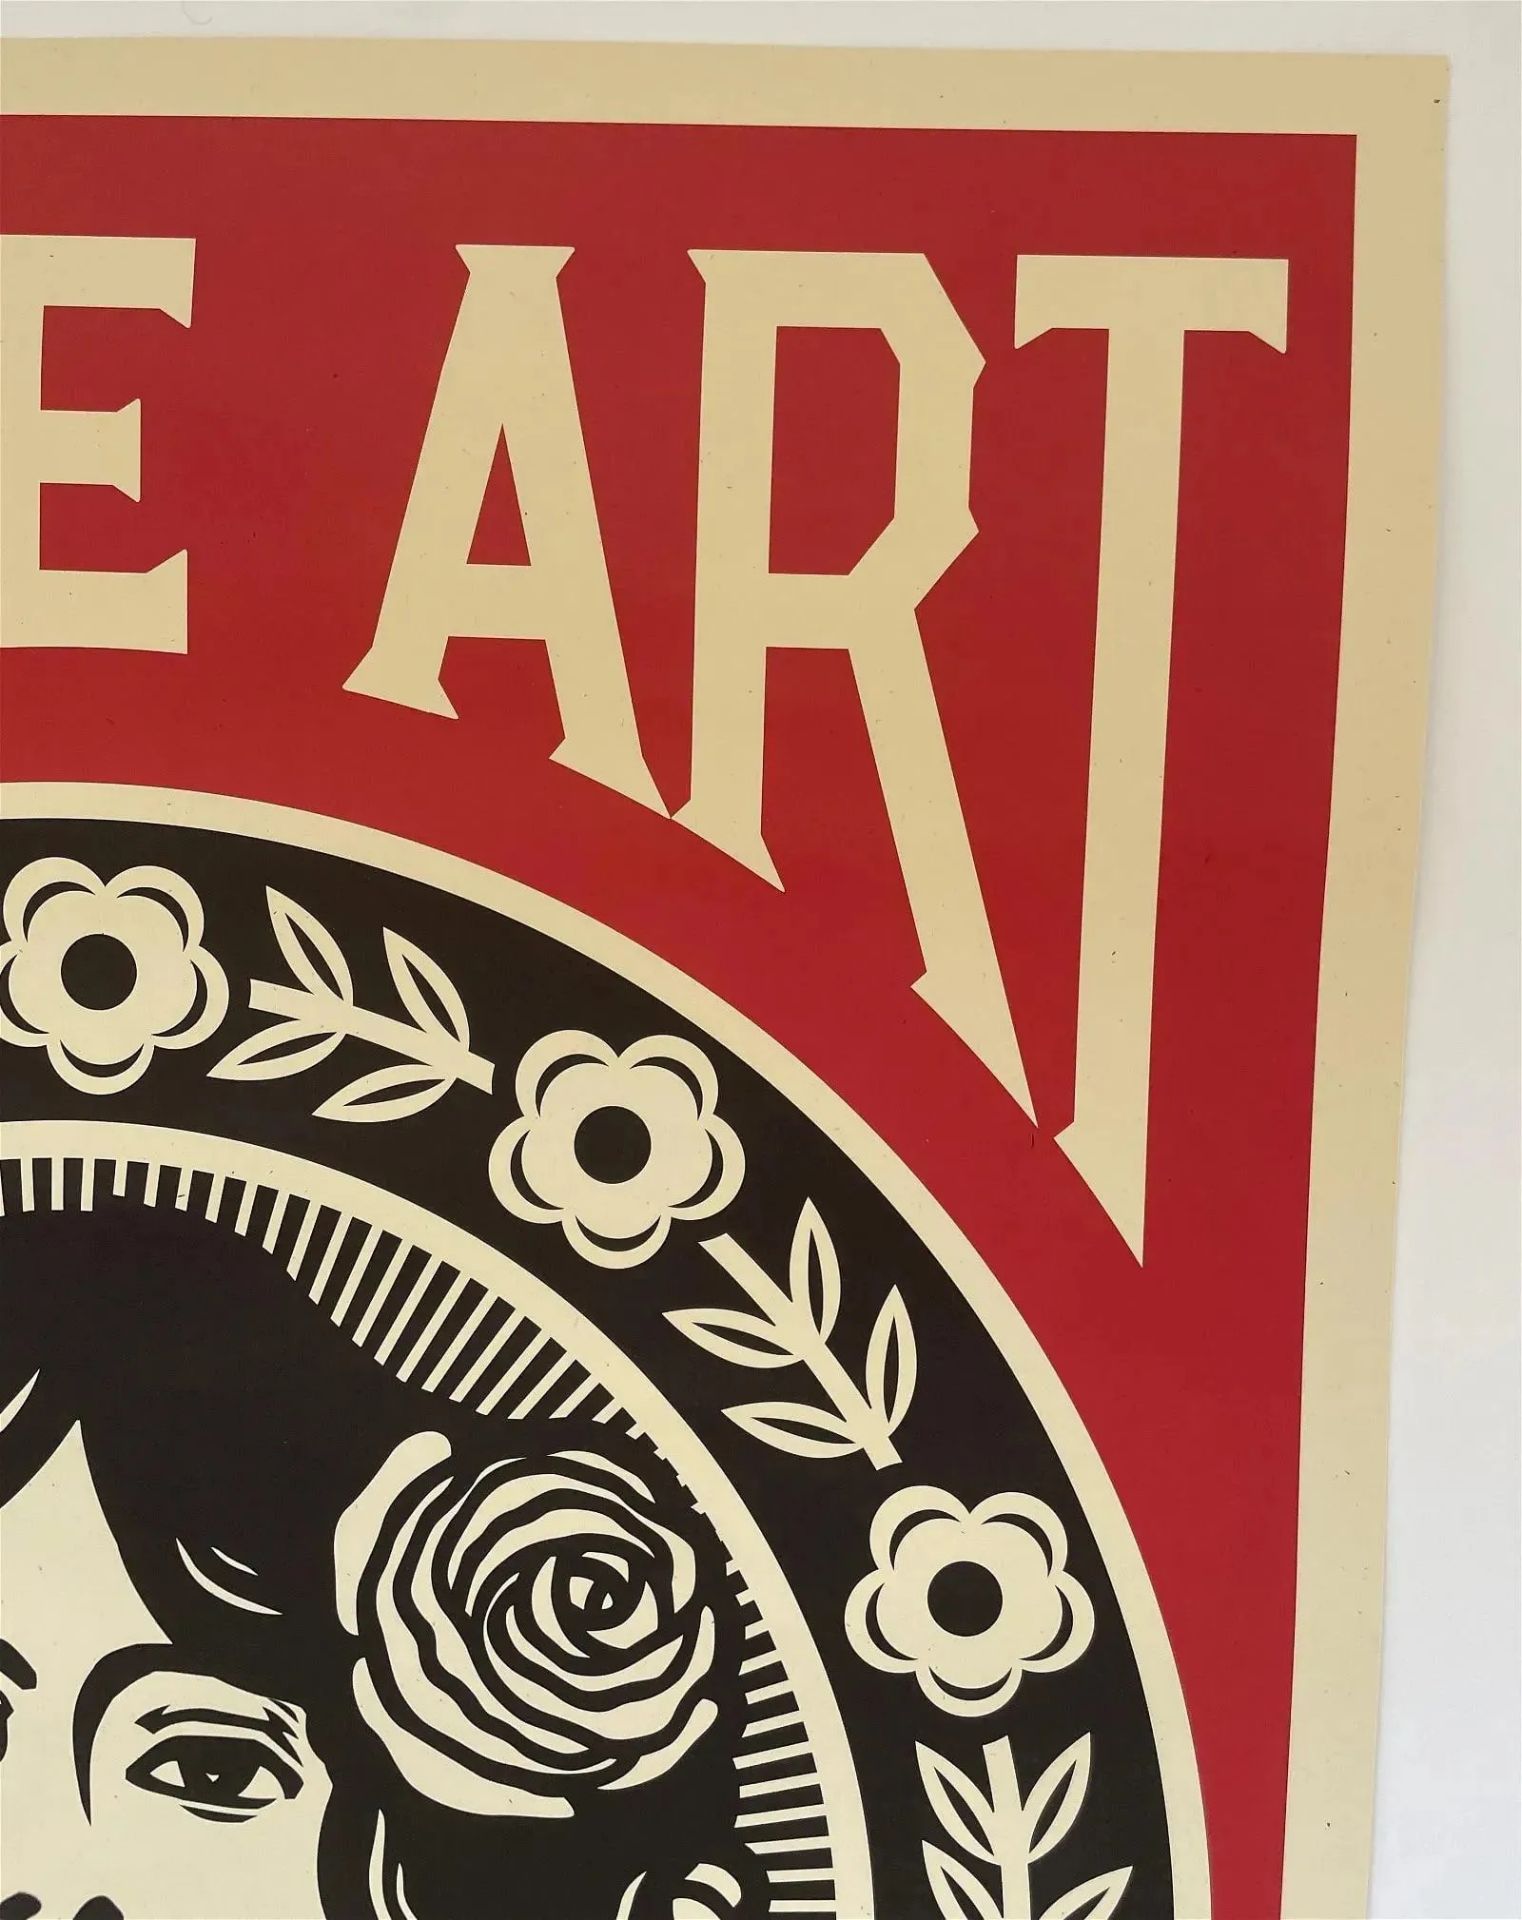 Shepard Fairey Signed "Make Art Not War" Offset Lithograph - Image 5 of 7